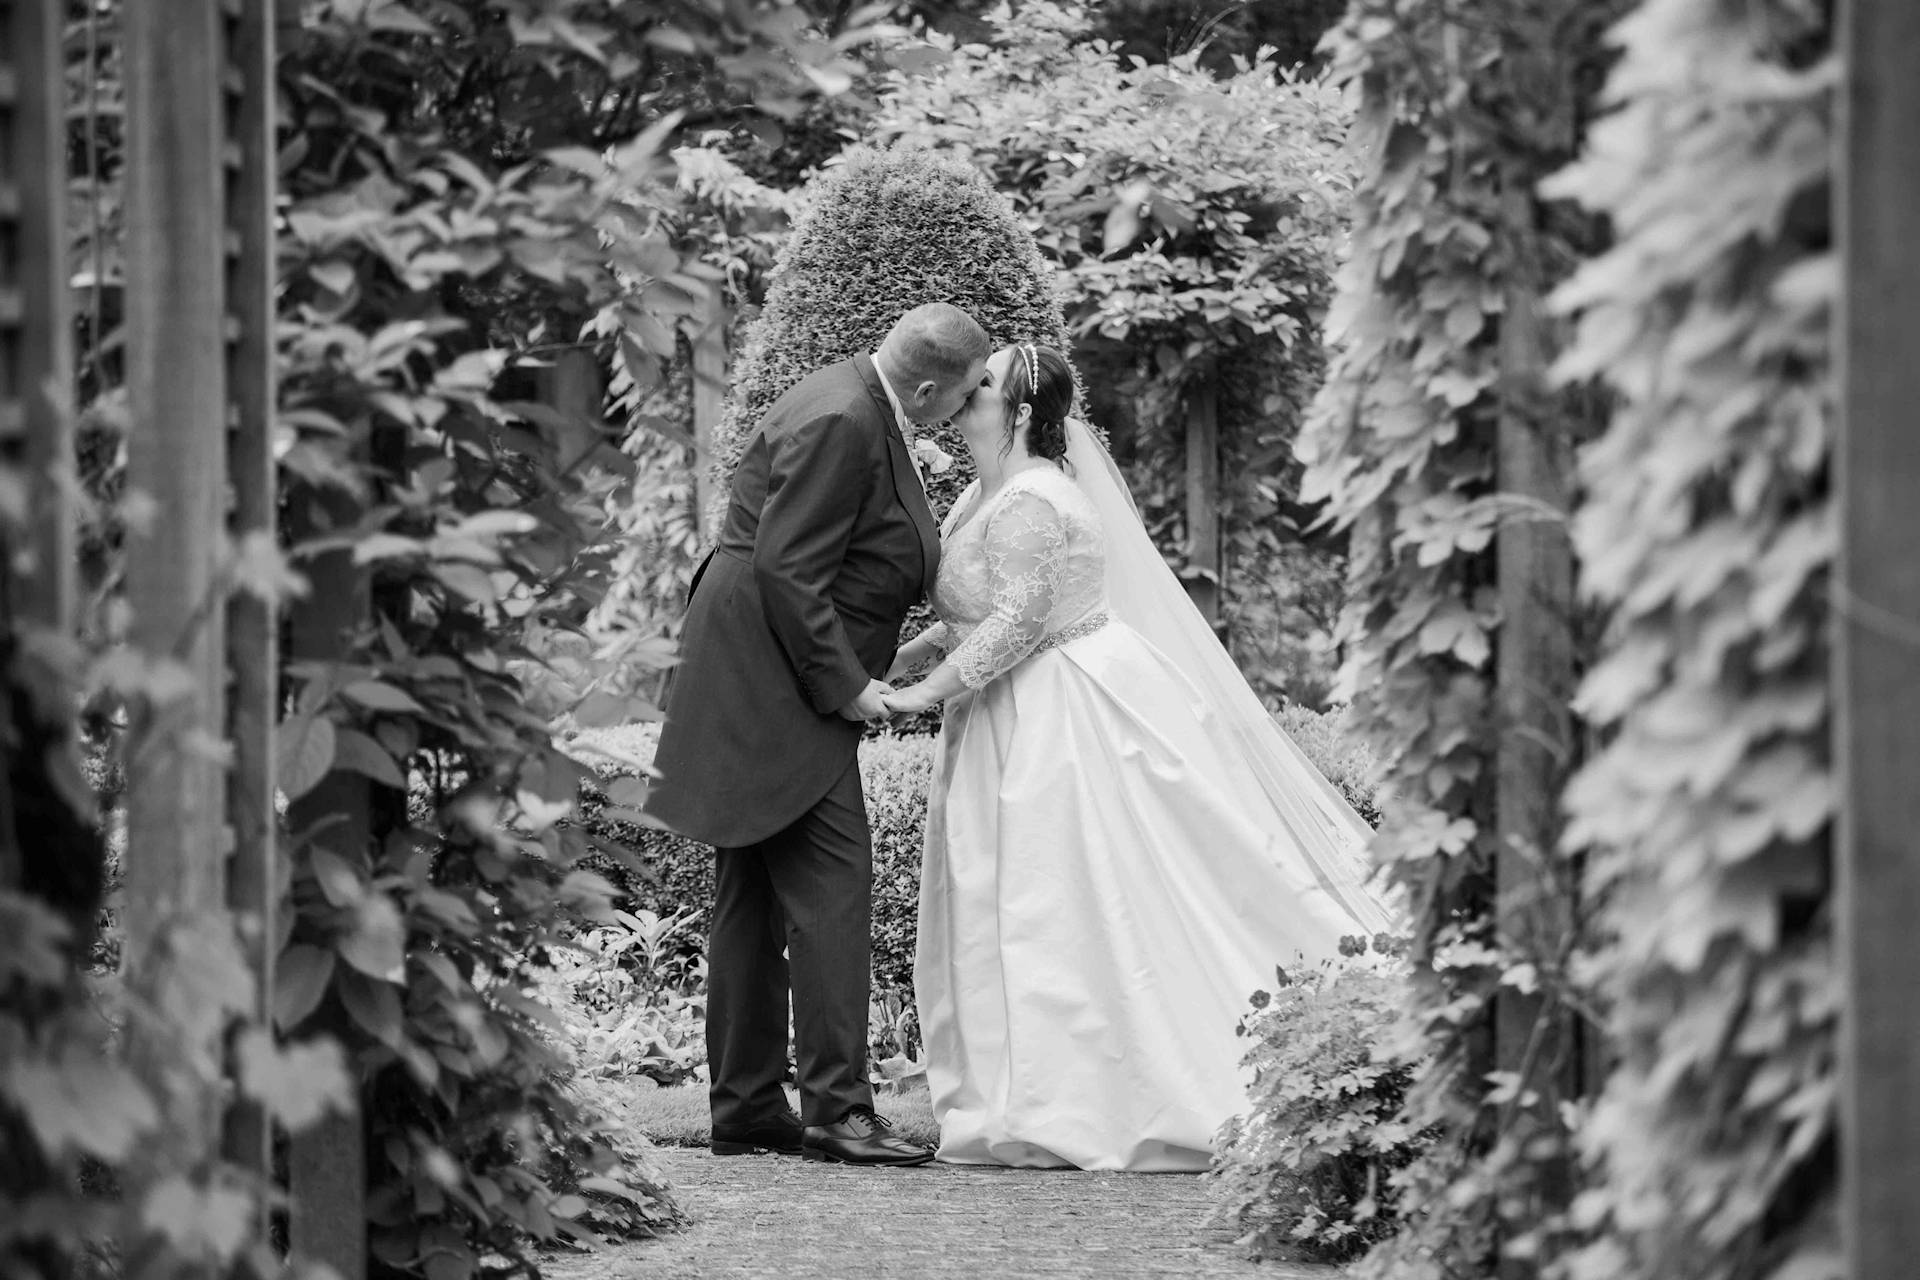 Bride & Groom in a garden at a Yorkshire wedding